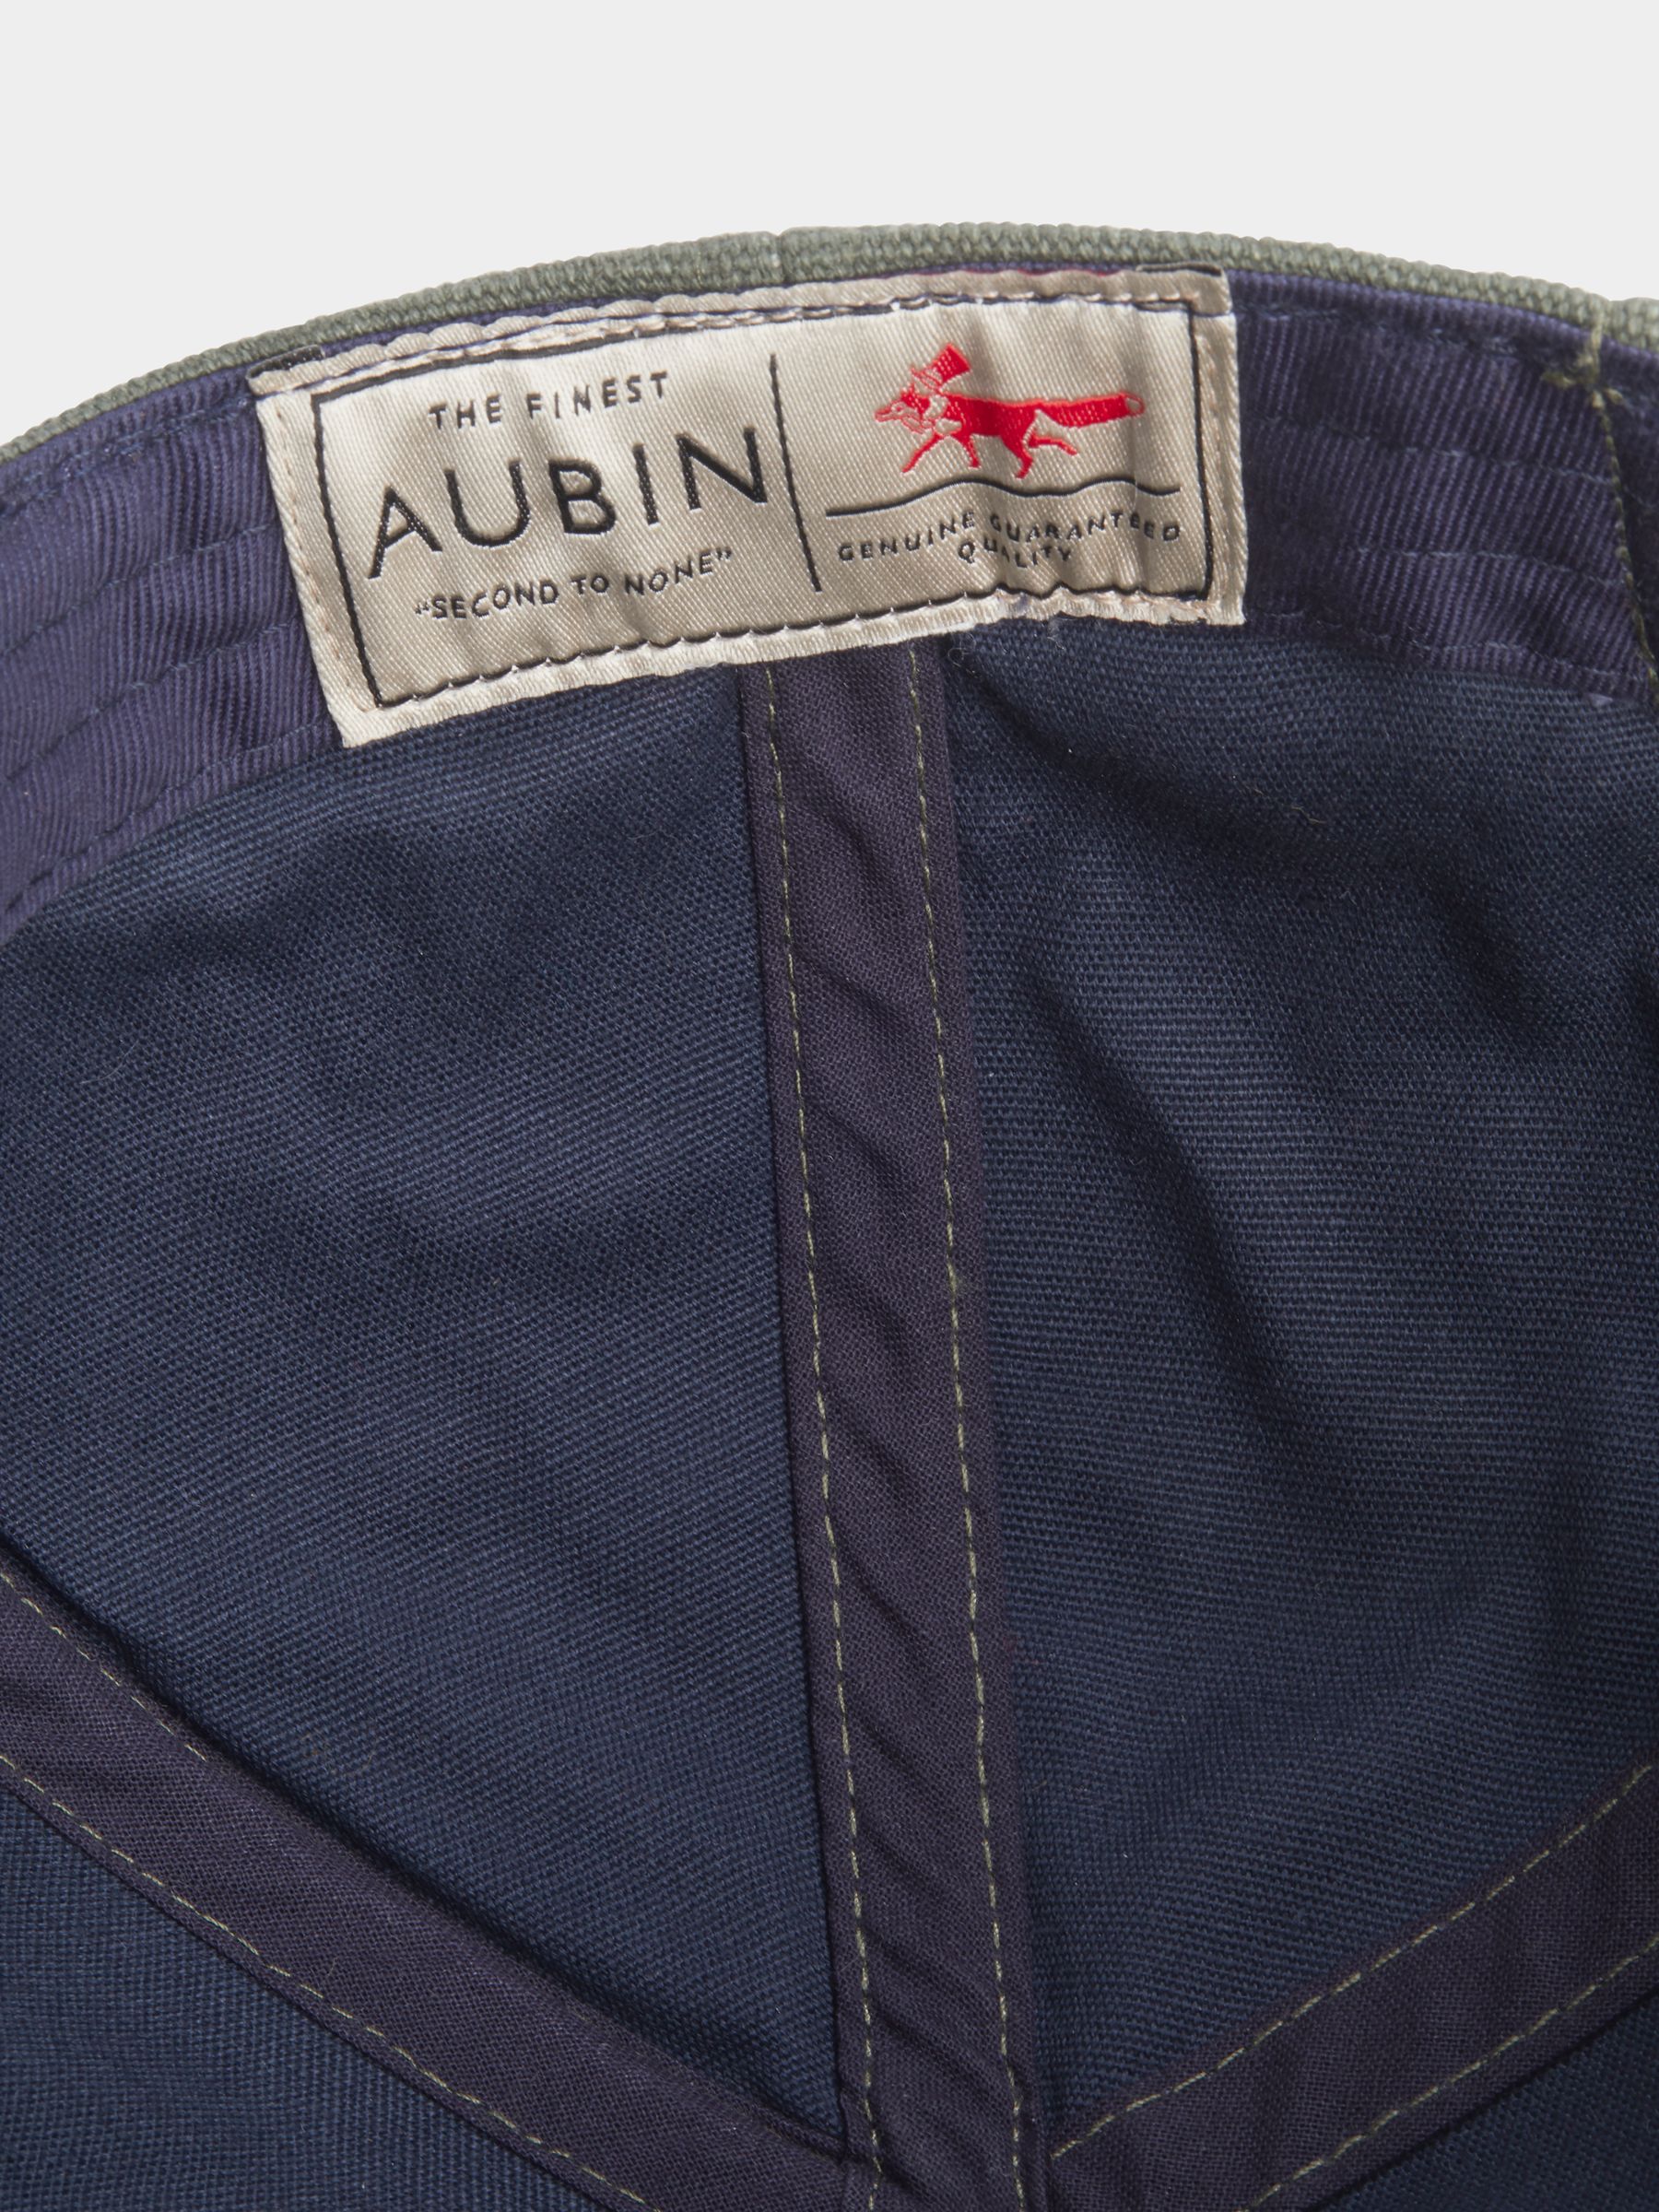 Aubin Coleford Cotton Cap, Khaki, One Size